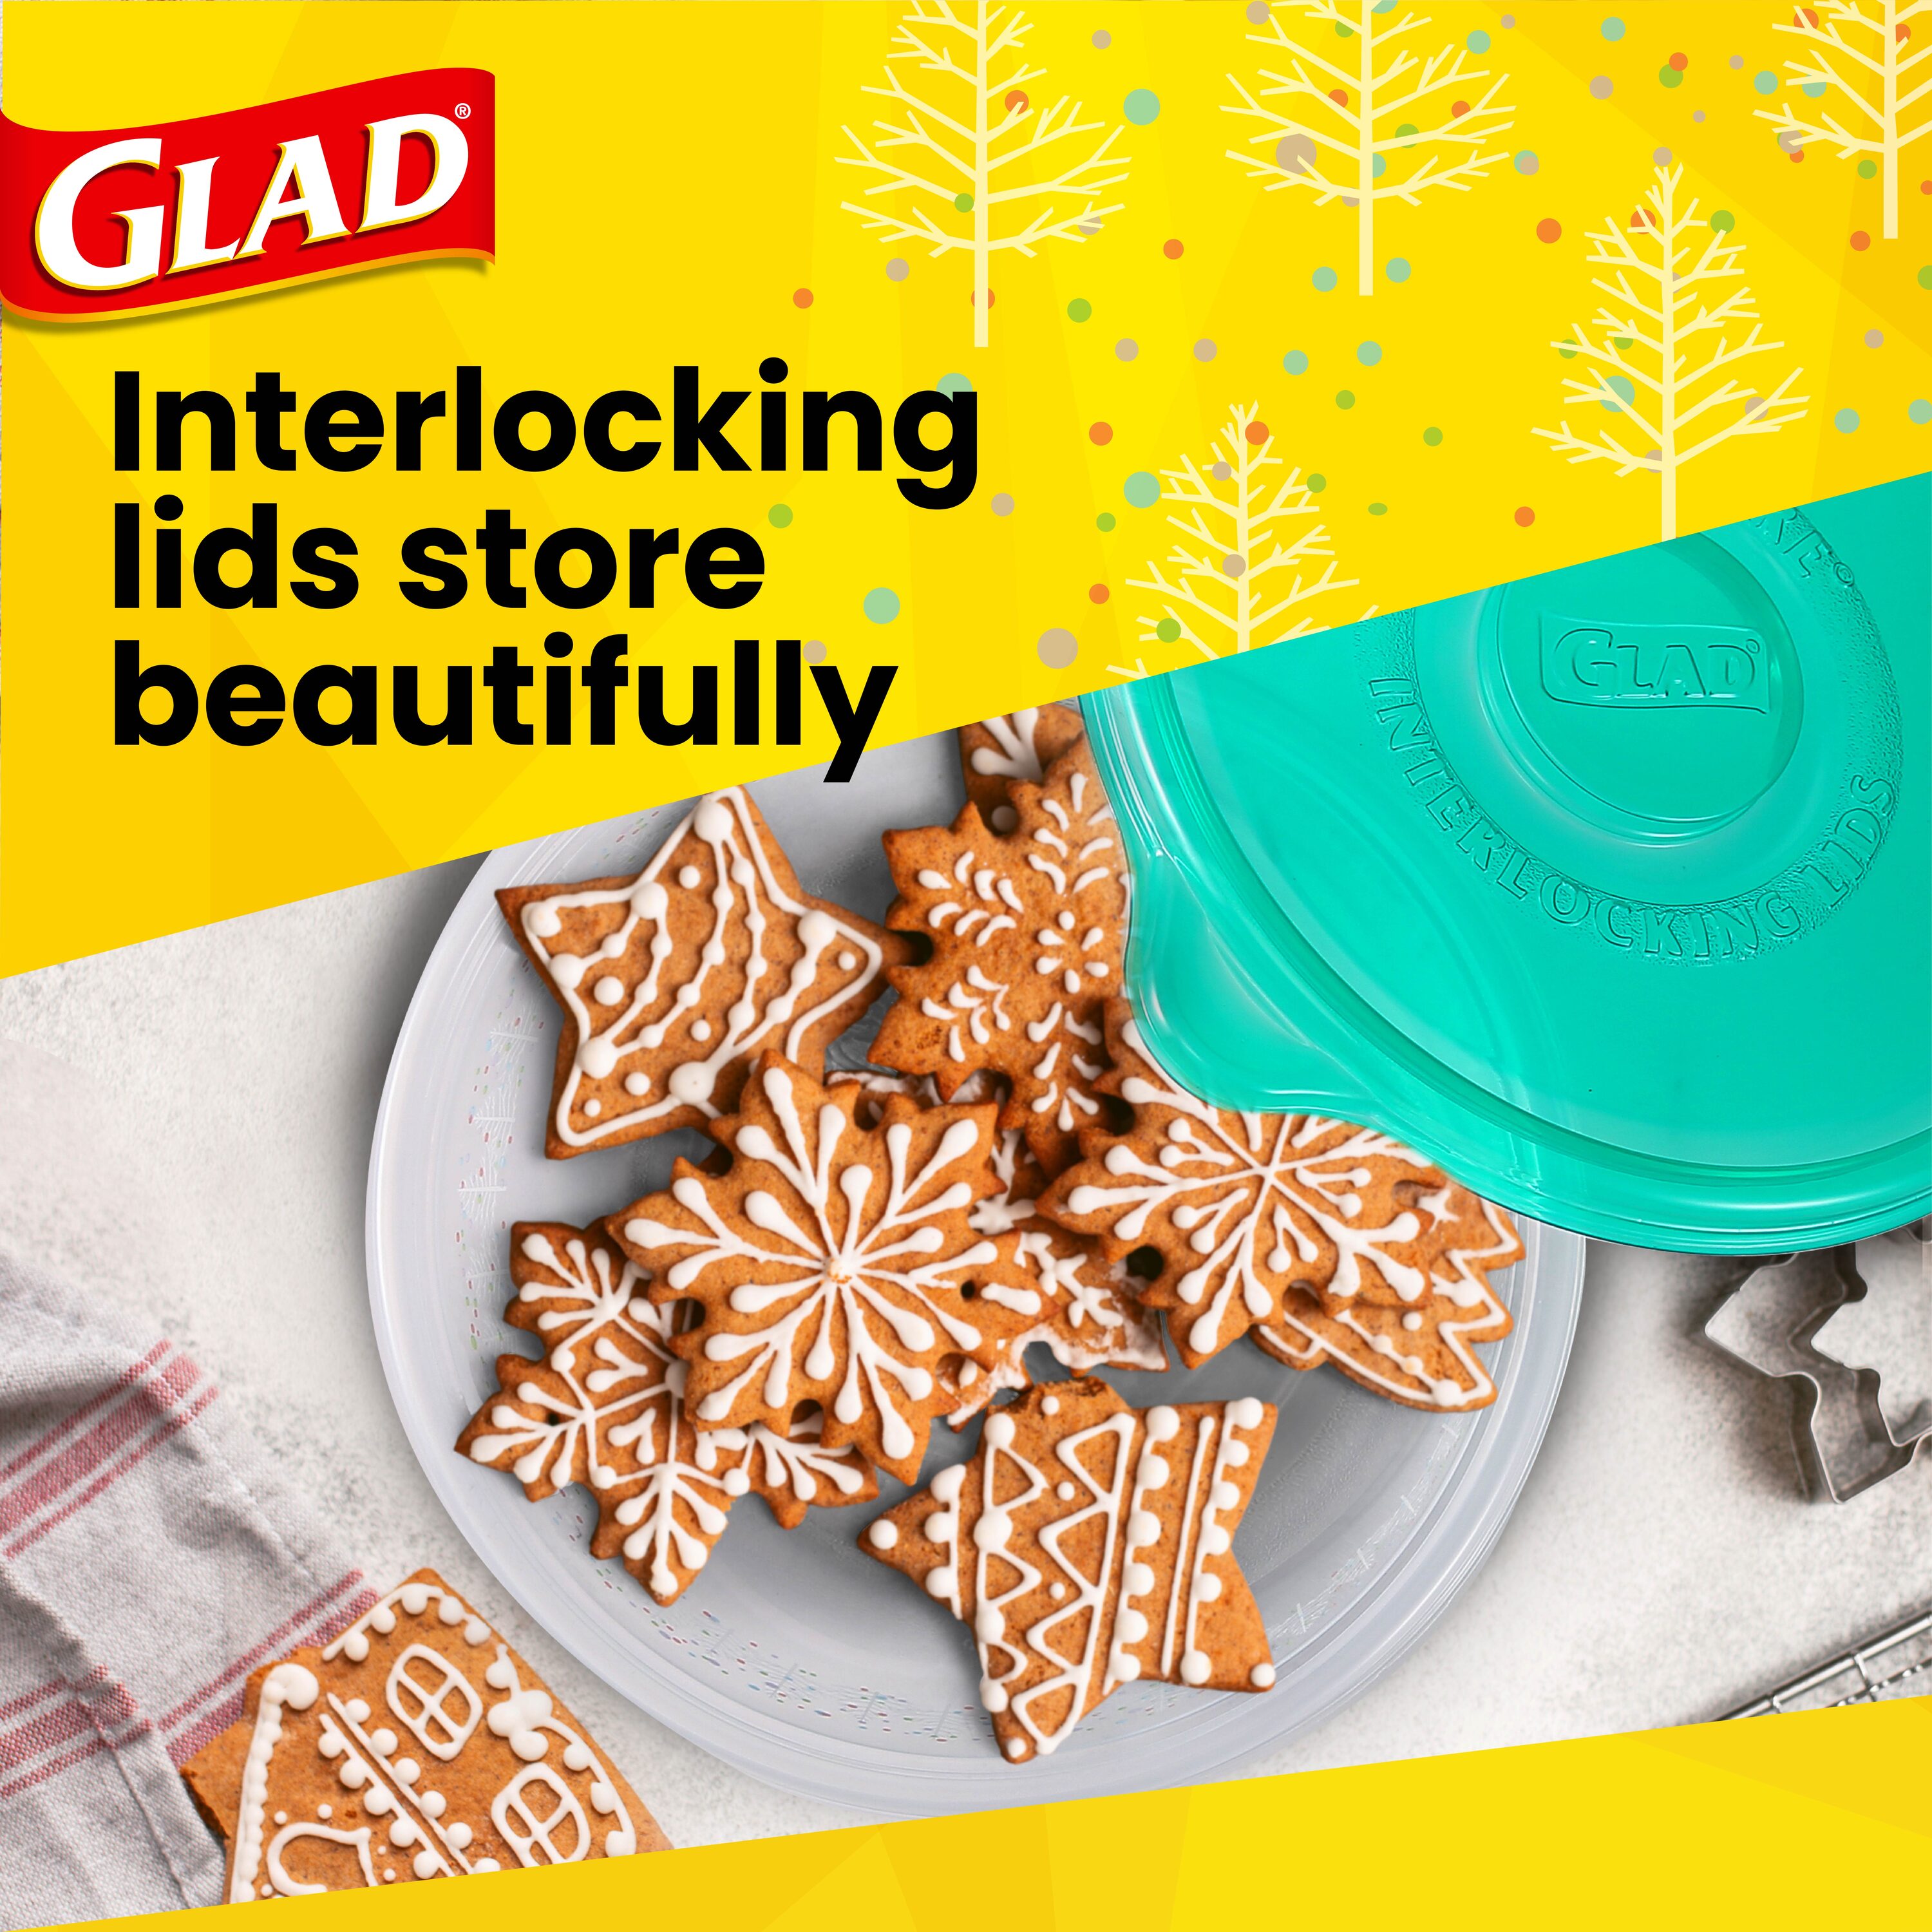 Glad 3-Pack Quart Plastic Bpa-free Reusable Food Storage Container